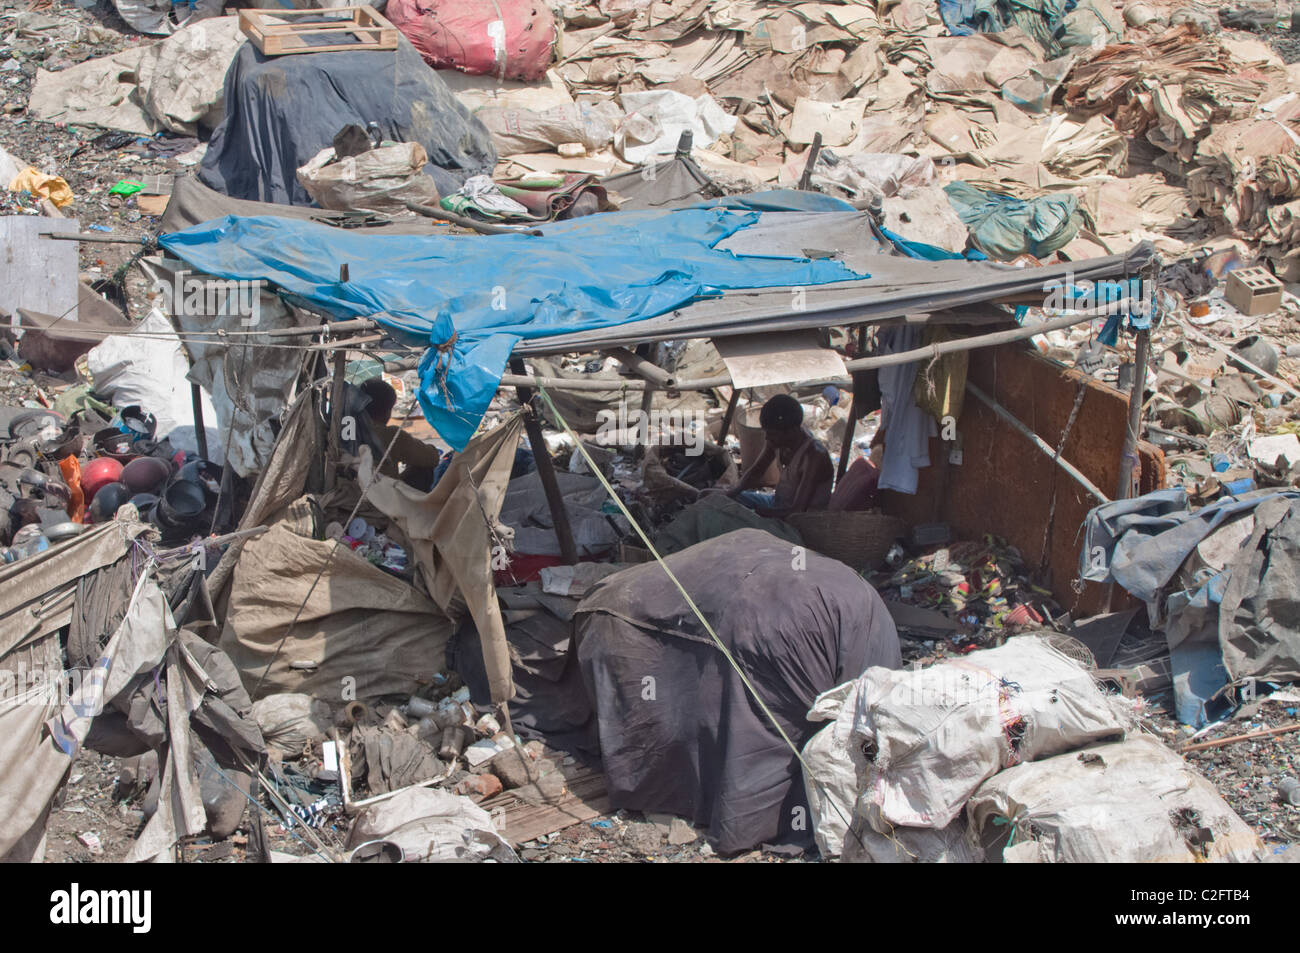 People living in squalor on a rubbish tip in Dharavi Slum in Mumbai, India Stock Photo